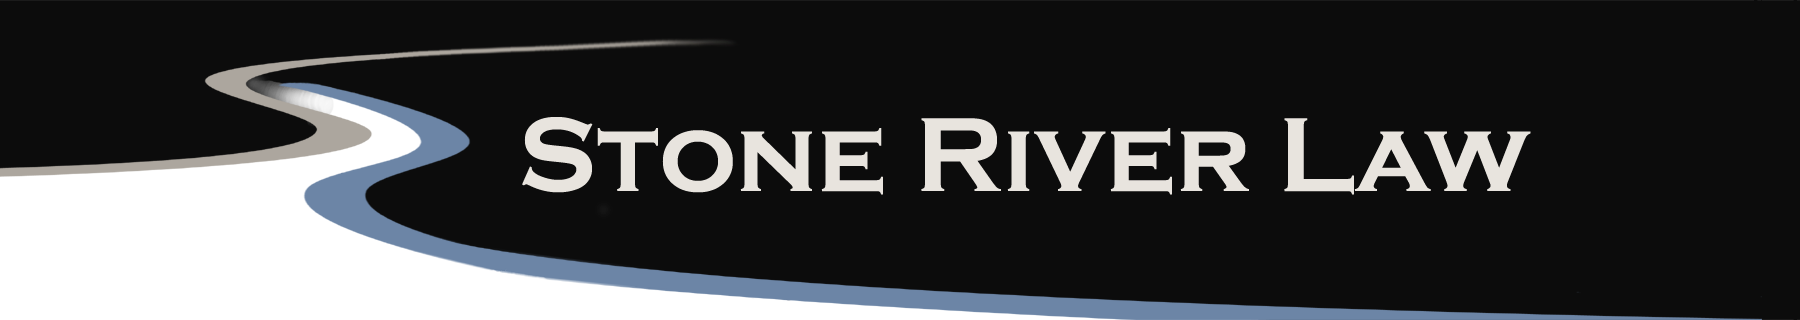 Stone River Law - Criminal Defense Attorneys